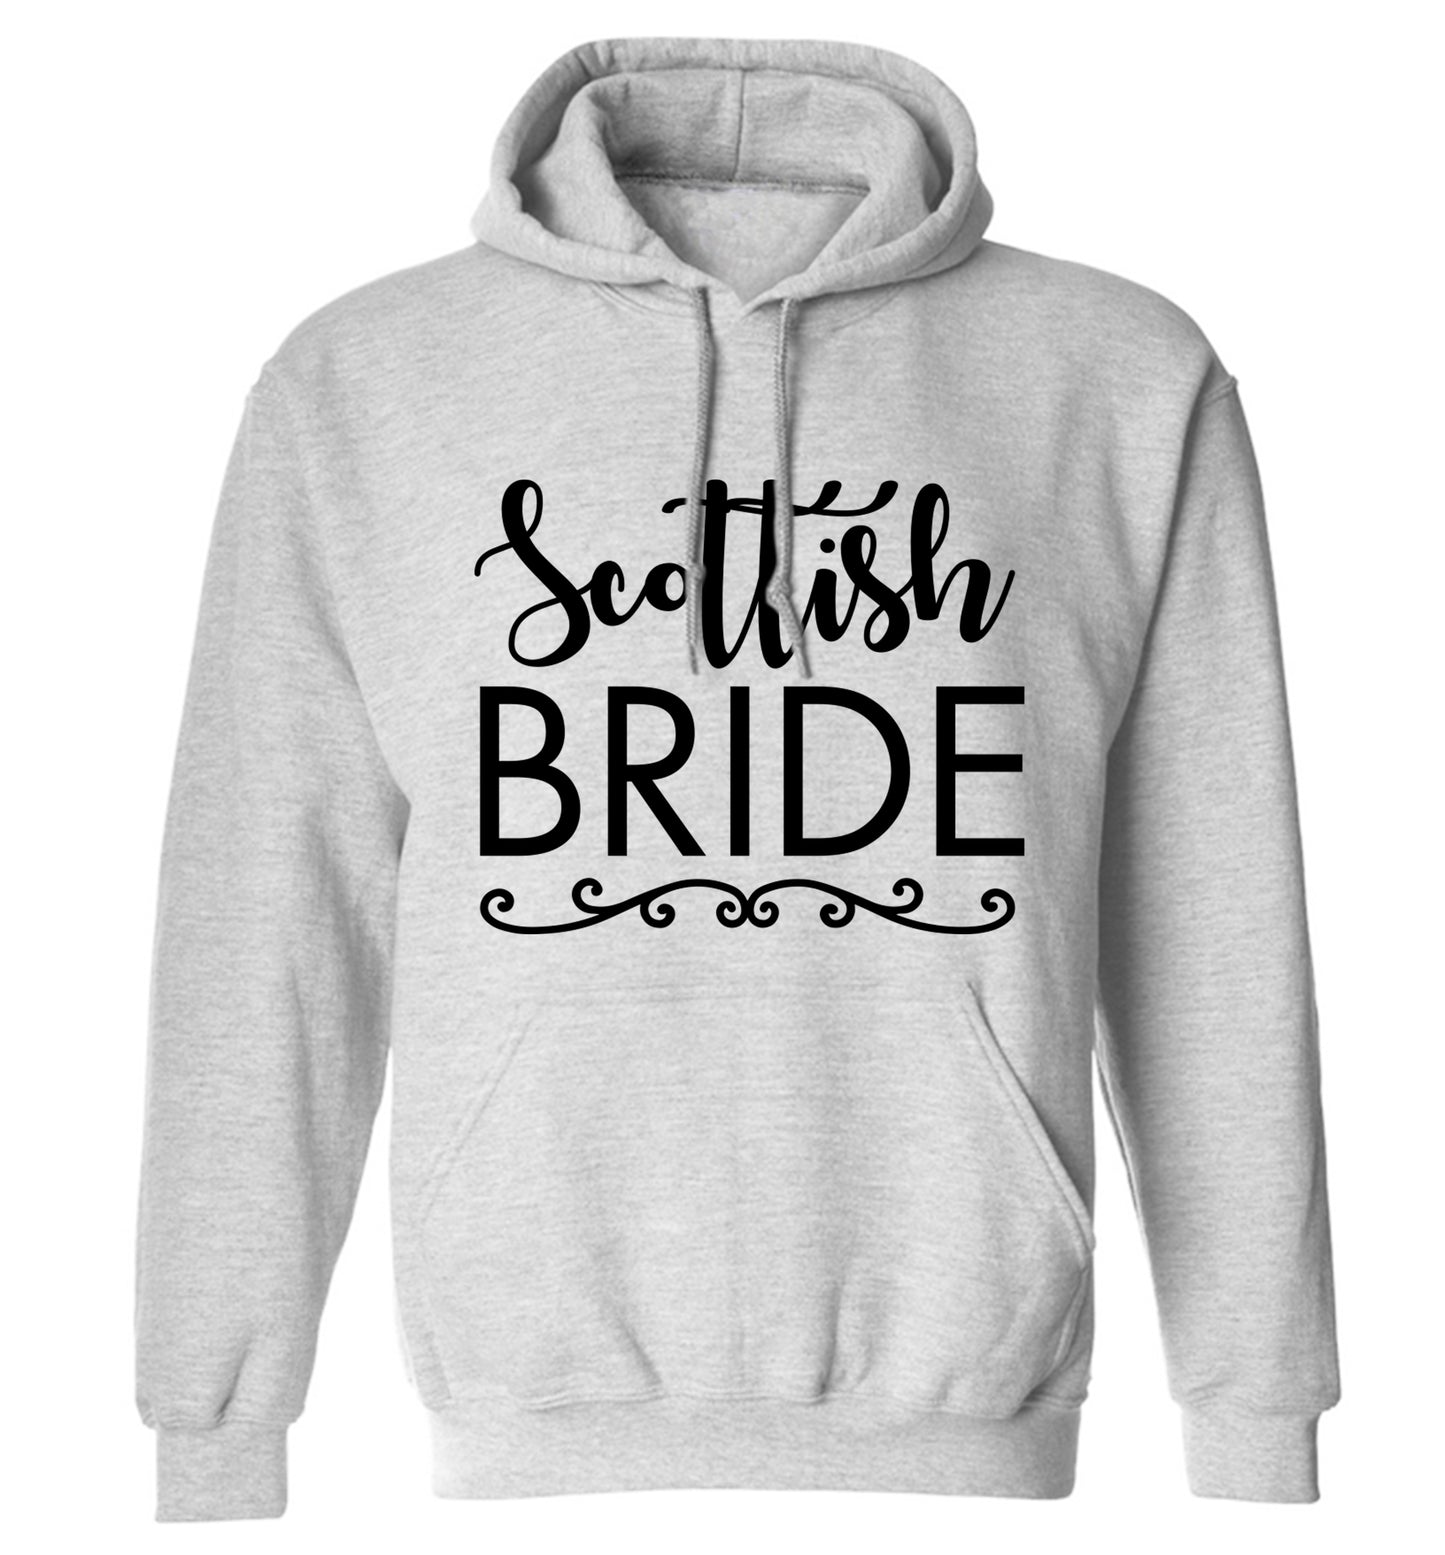 Scottish Bride adults unisex grey hoodie 2XL